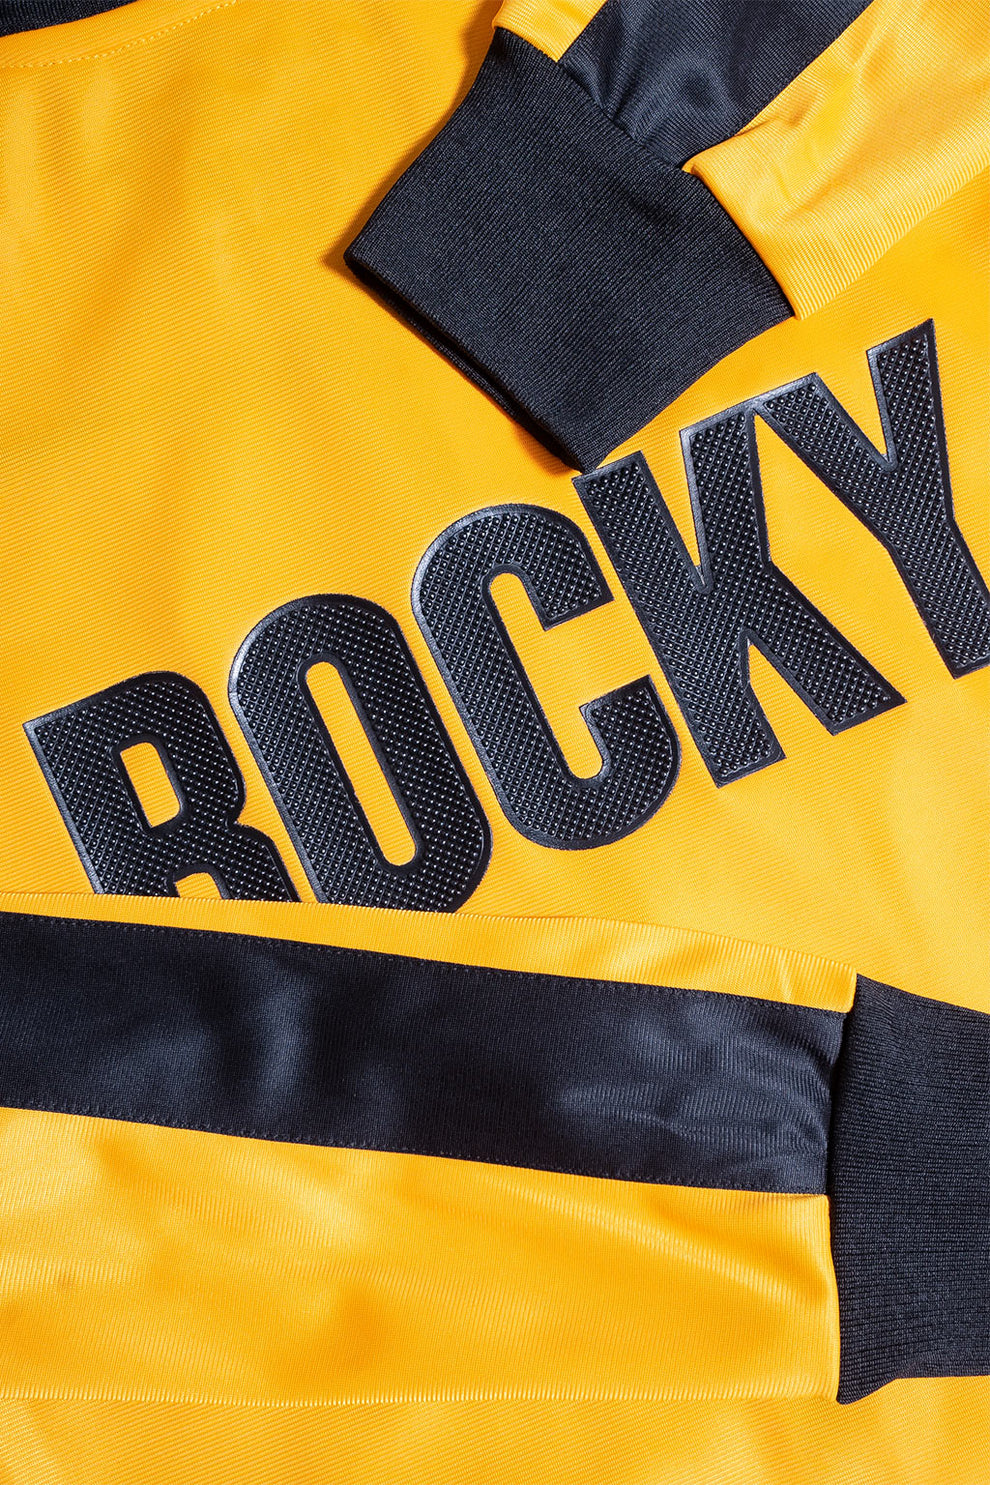 Sudadera Rocky 3 Amarilla